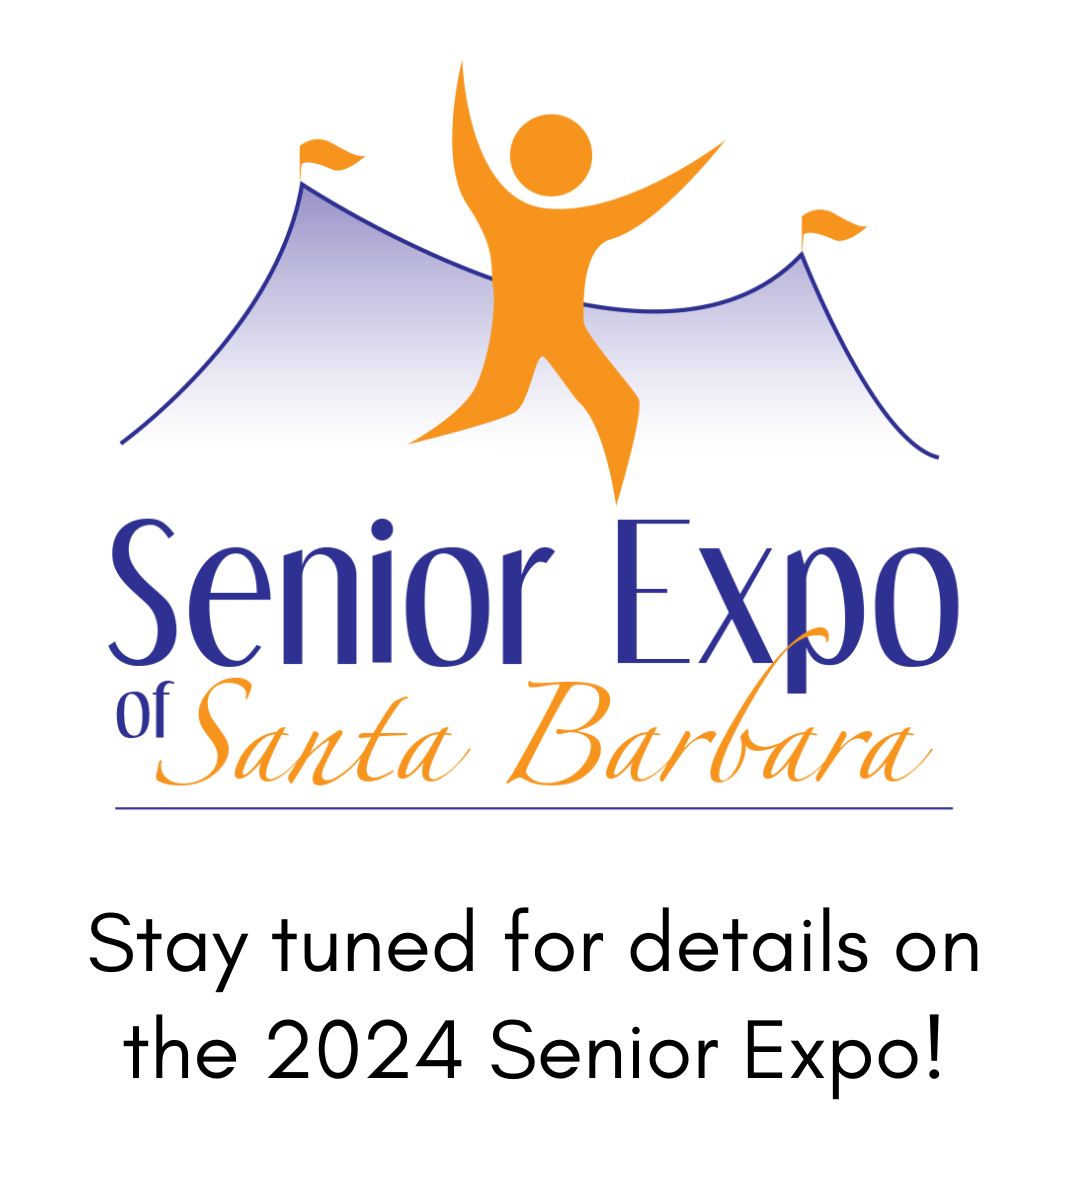 Senior Expo of Santa Barbara. October 4, 2023. 9 AM to 1 PM at the Earl Warren Showgrounds